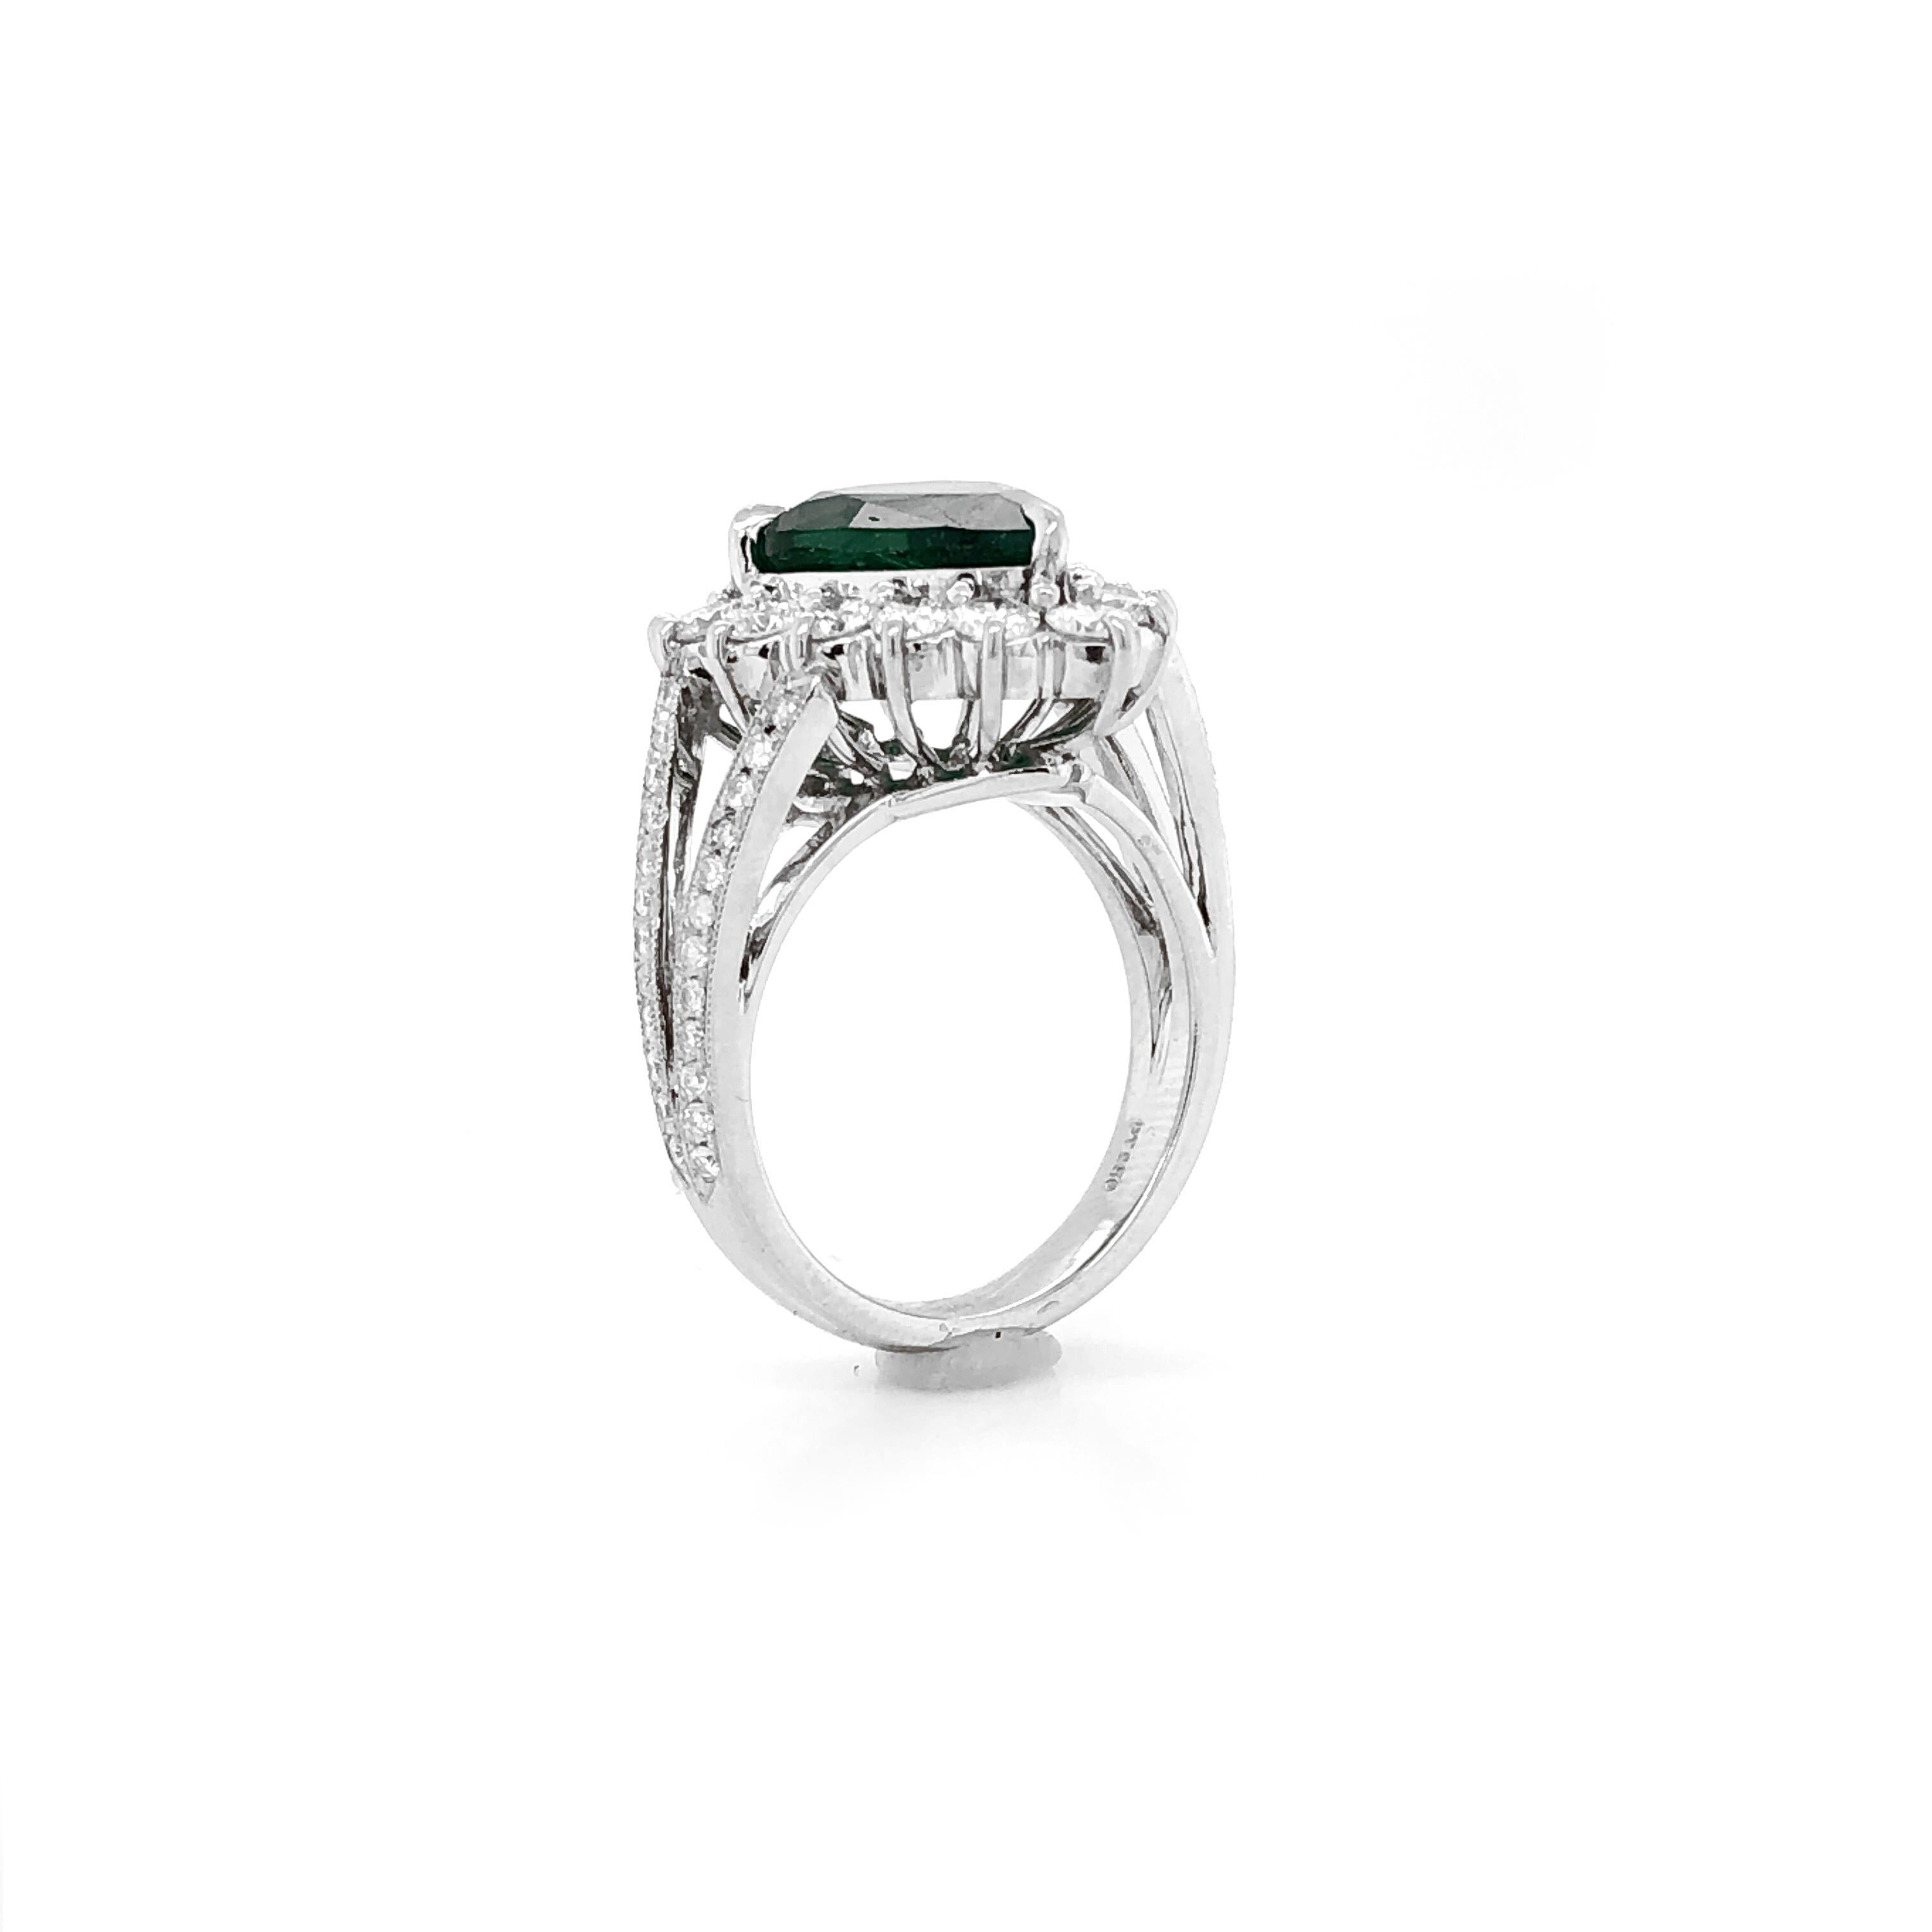 Certified Emerald Pear Cut 3.66 Carat Diamond 1.36 Carat Total Platinum Ring For Sale 1